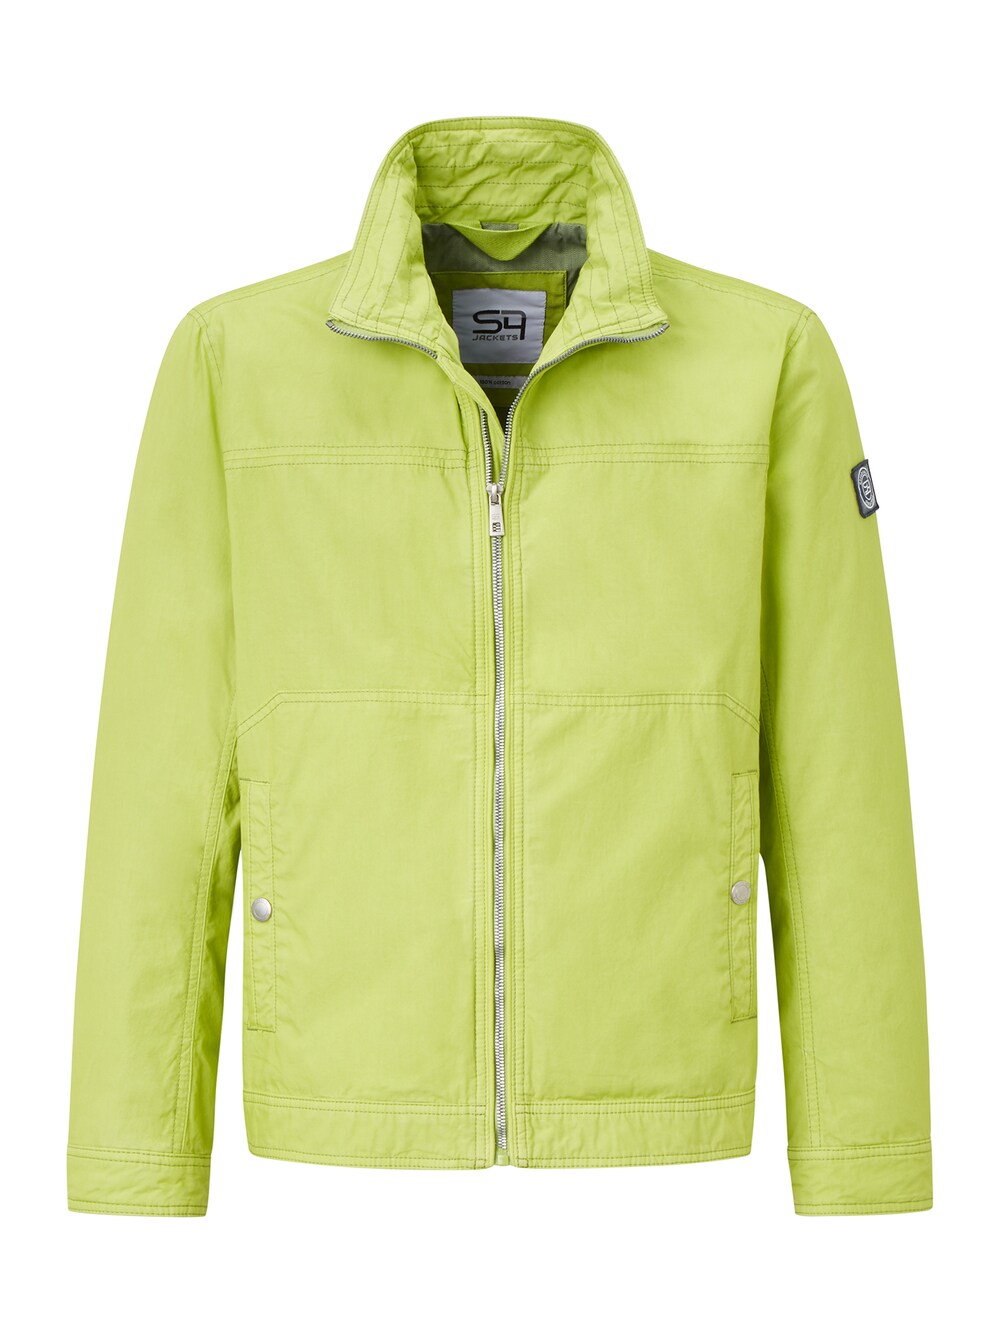 Межсезонная куртка S4 Jackets, зеленый